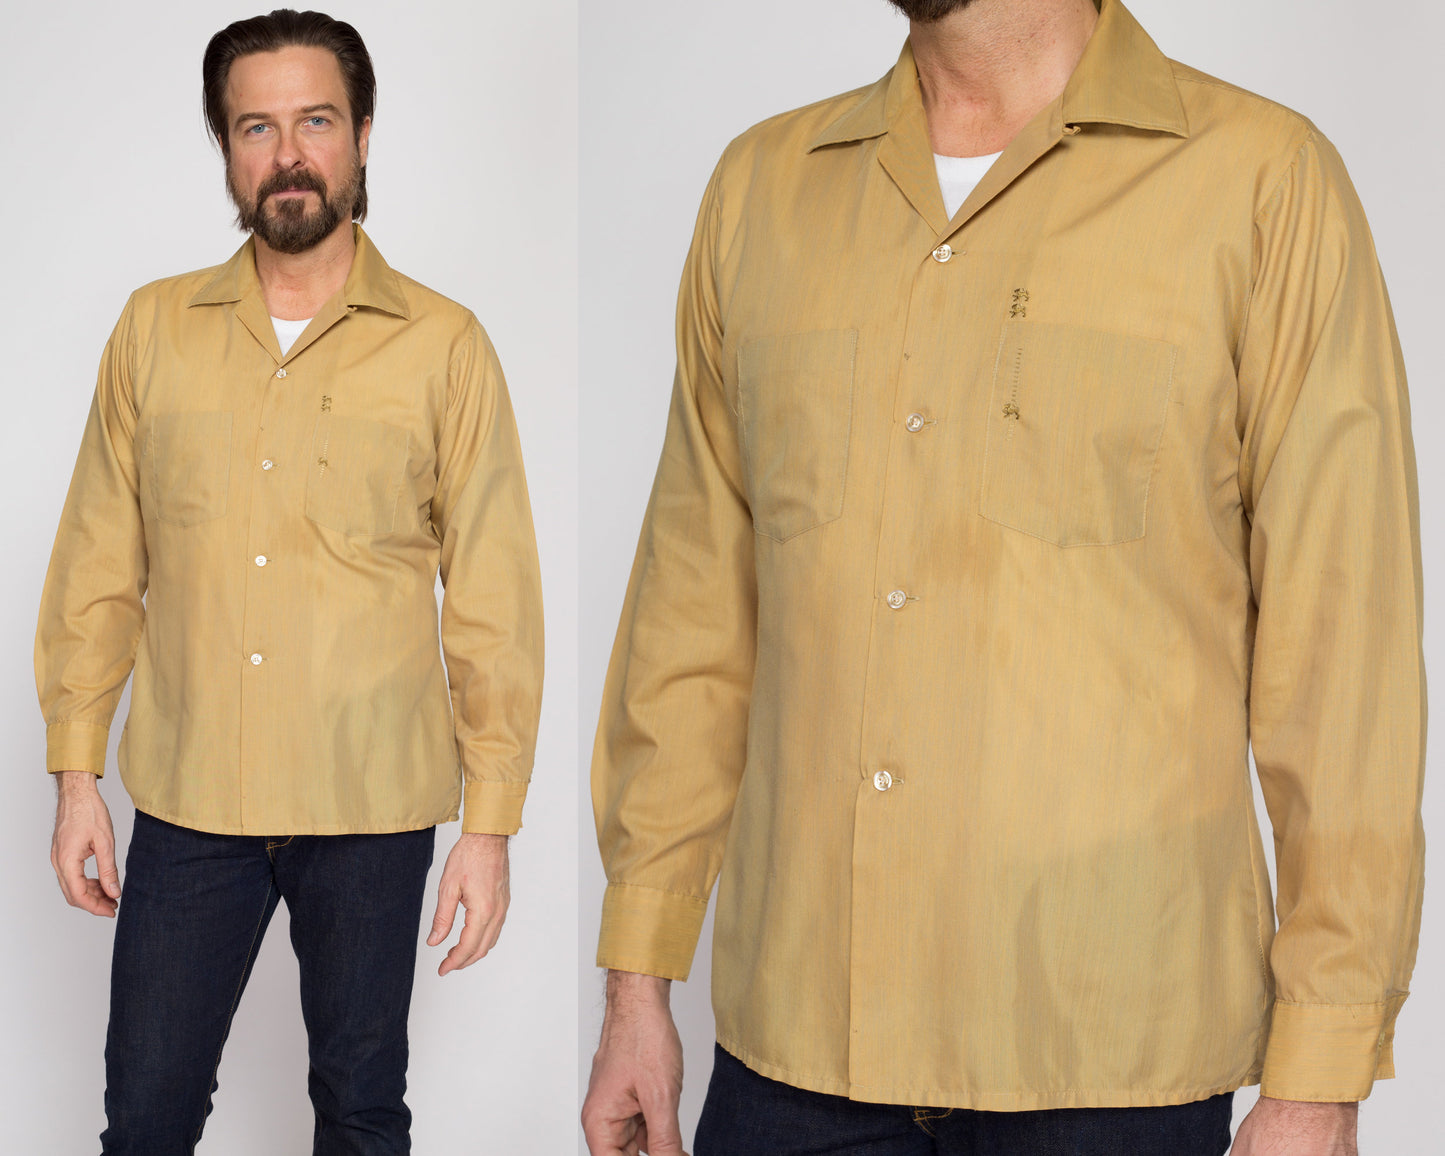 Medium 60s Arrow Mustard Yellow Loop Collar Shirt | Vintage Decton Perma Iron Button Up Long Sleeve Top